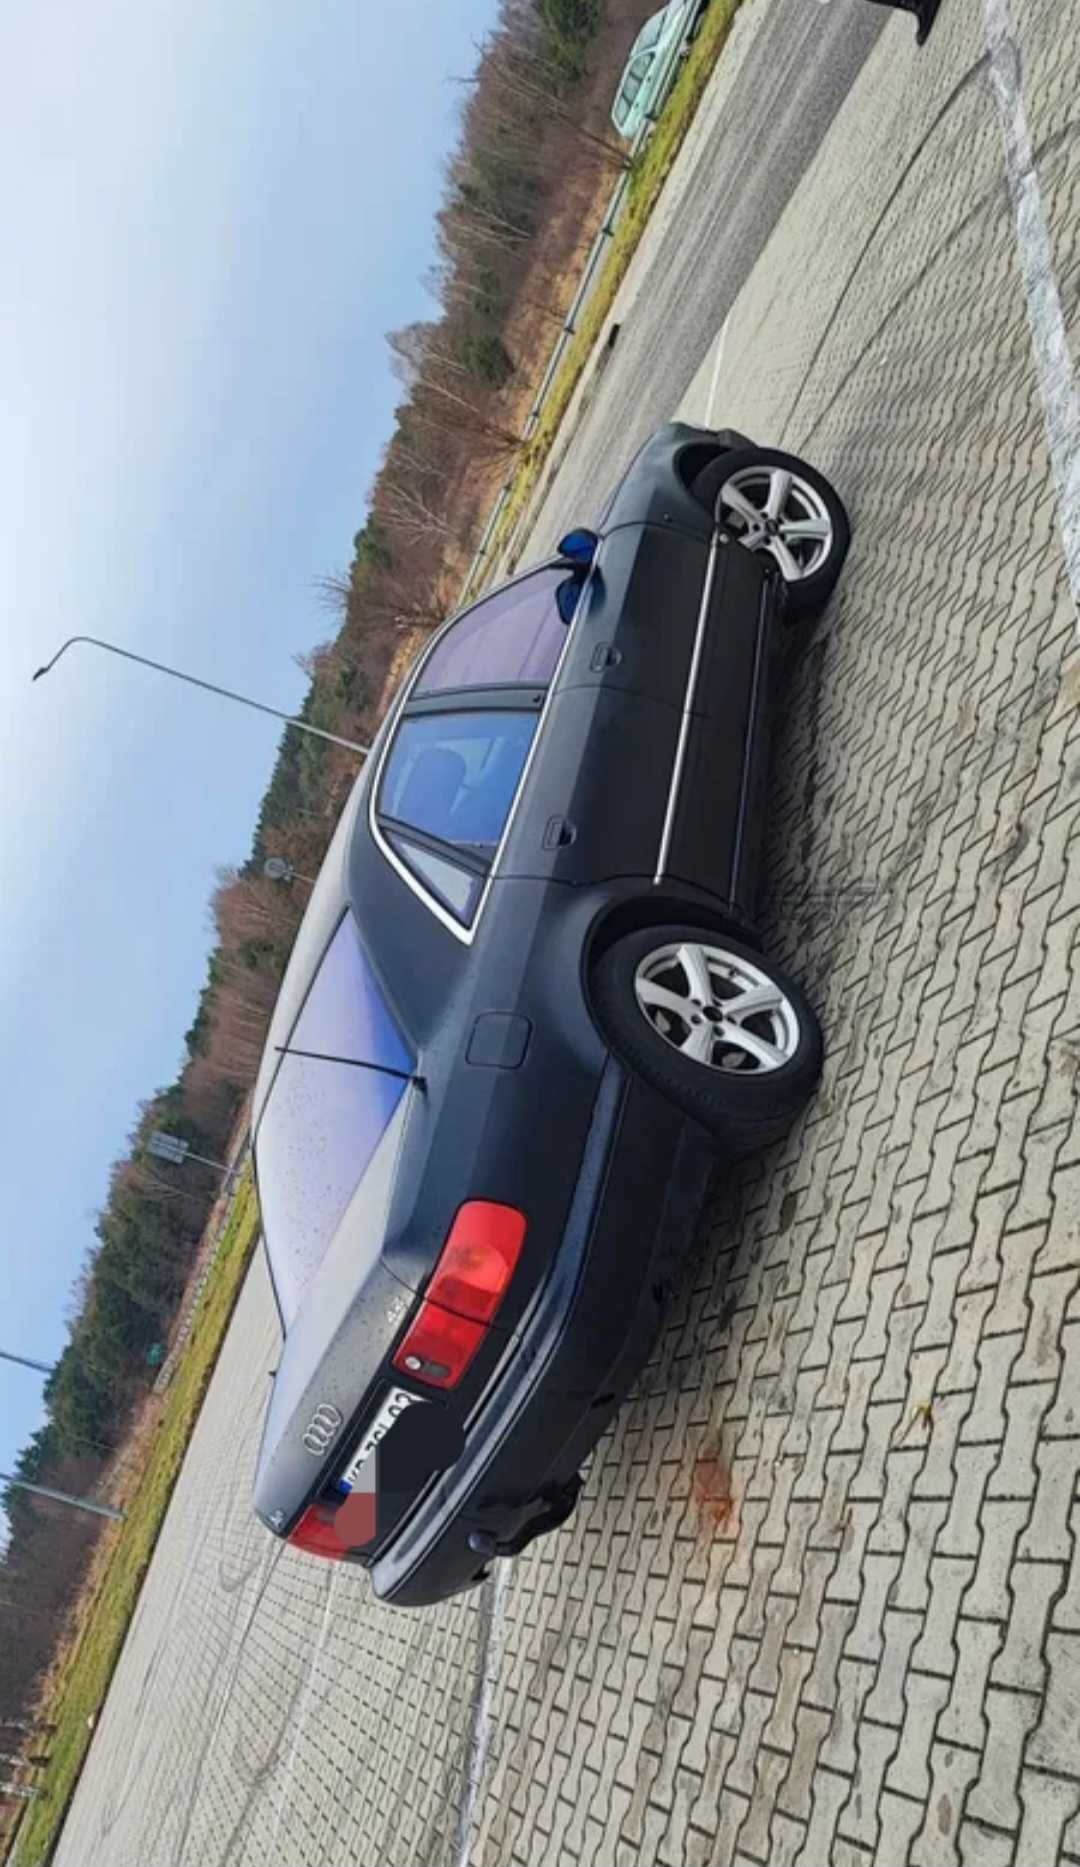 Audi a8 d2 4.2 abz quattro 96r Sprawna 100%